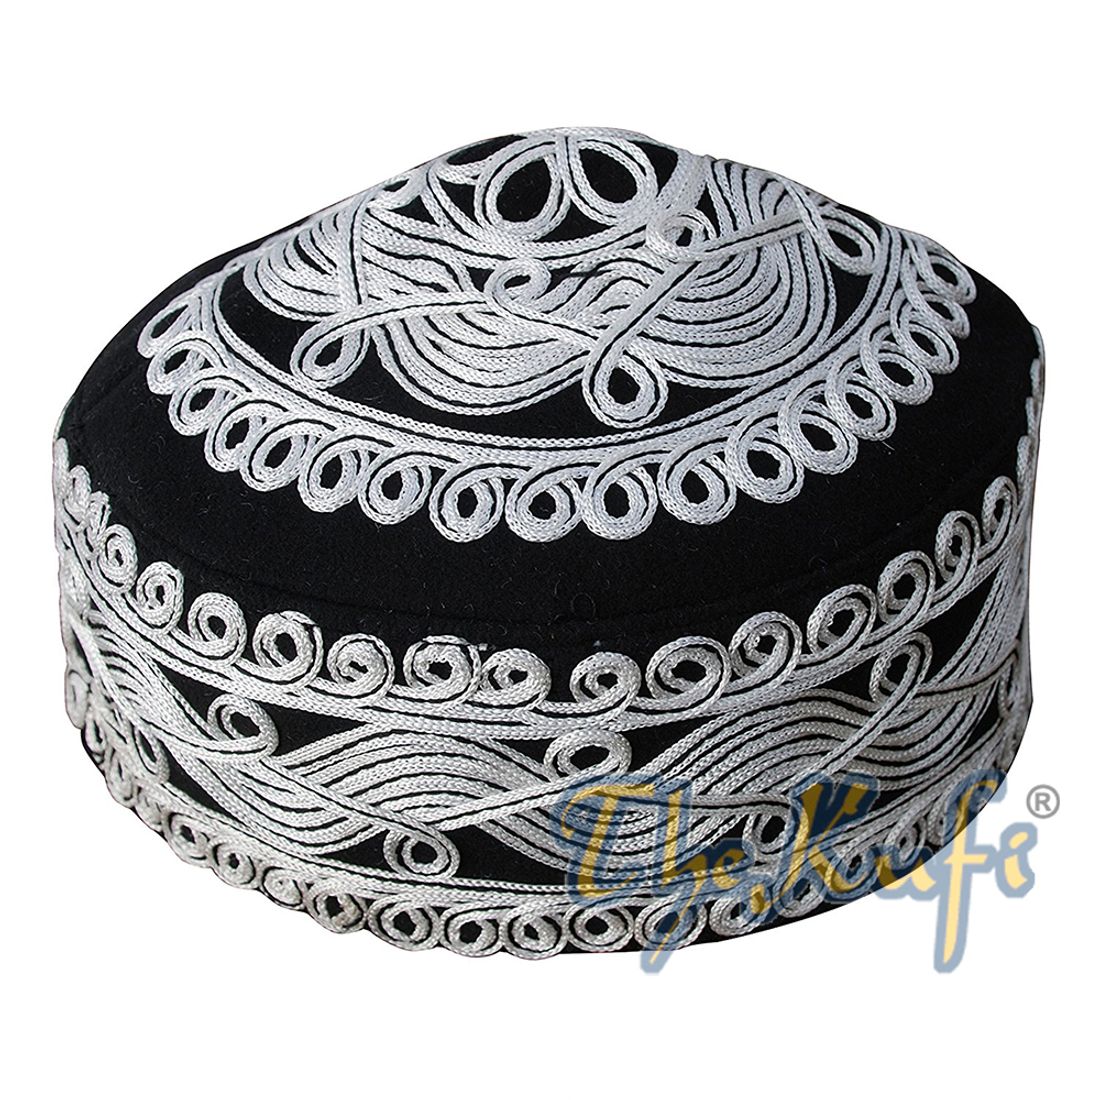 Handcrafted Black White Macramé Design Felt Kufi Hat